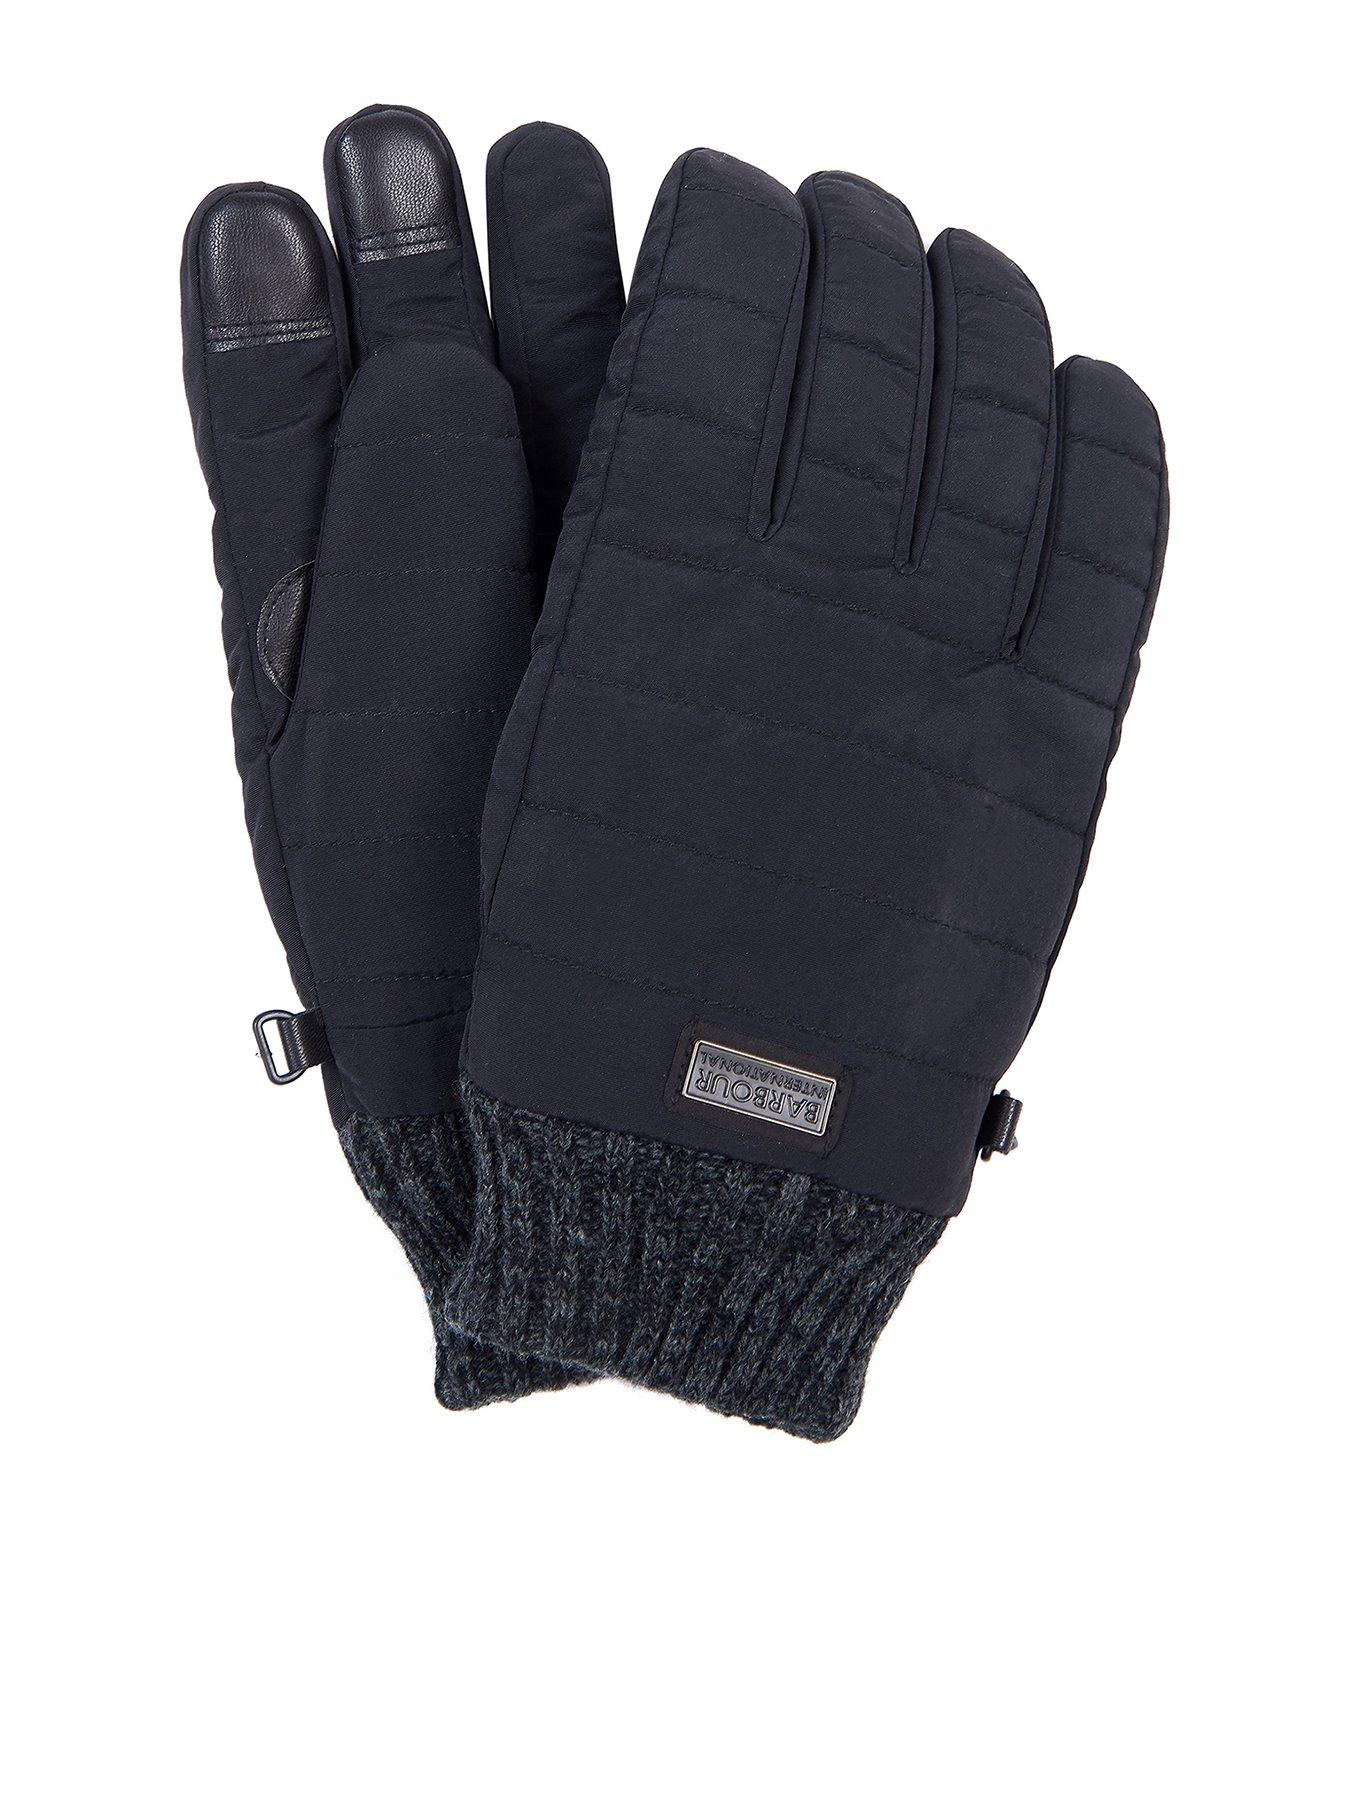 barbour international gloves sizing